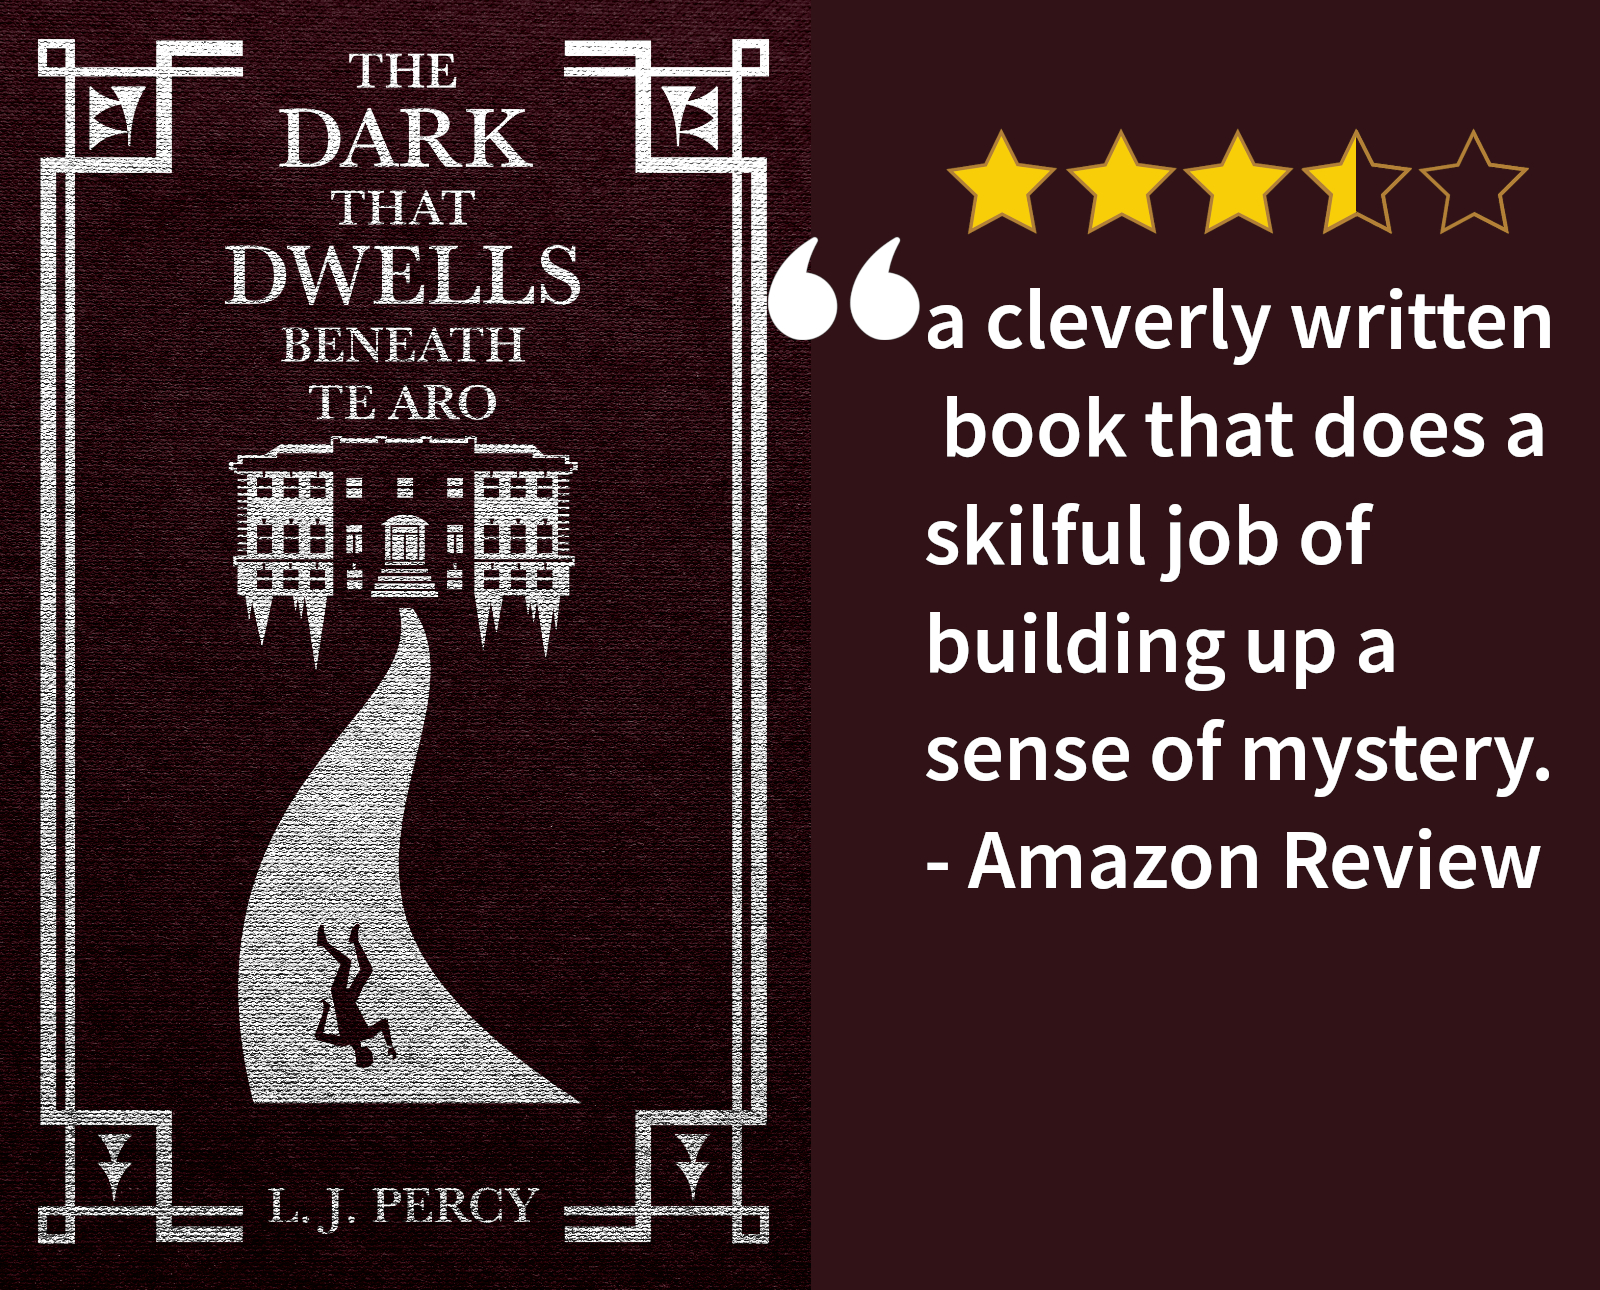 The Dark That Dwells Beneath Te Aro rated 4 stars on Amazon books